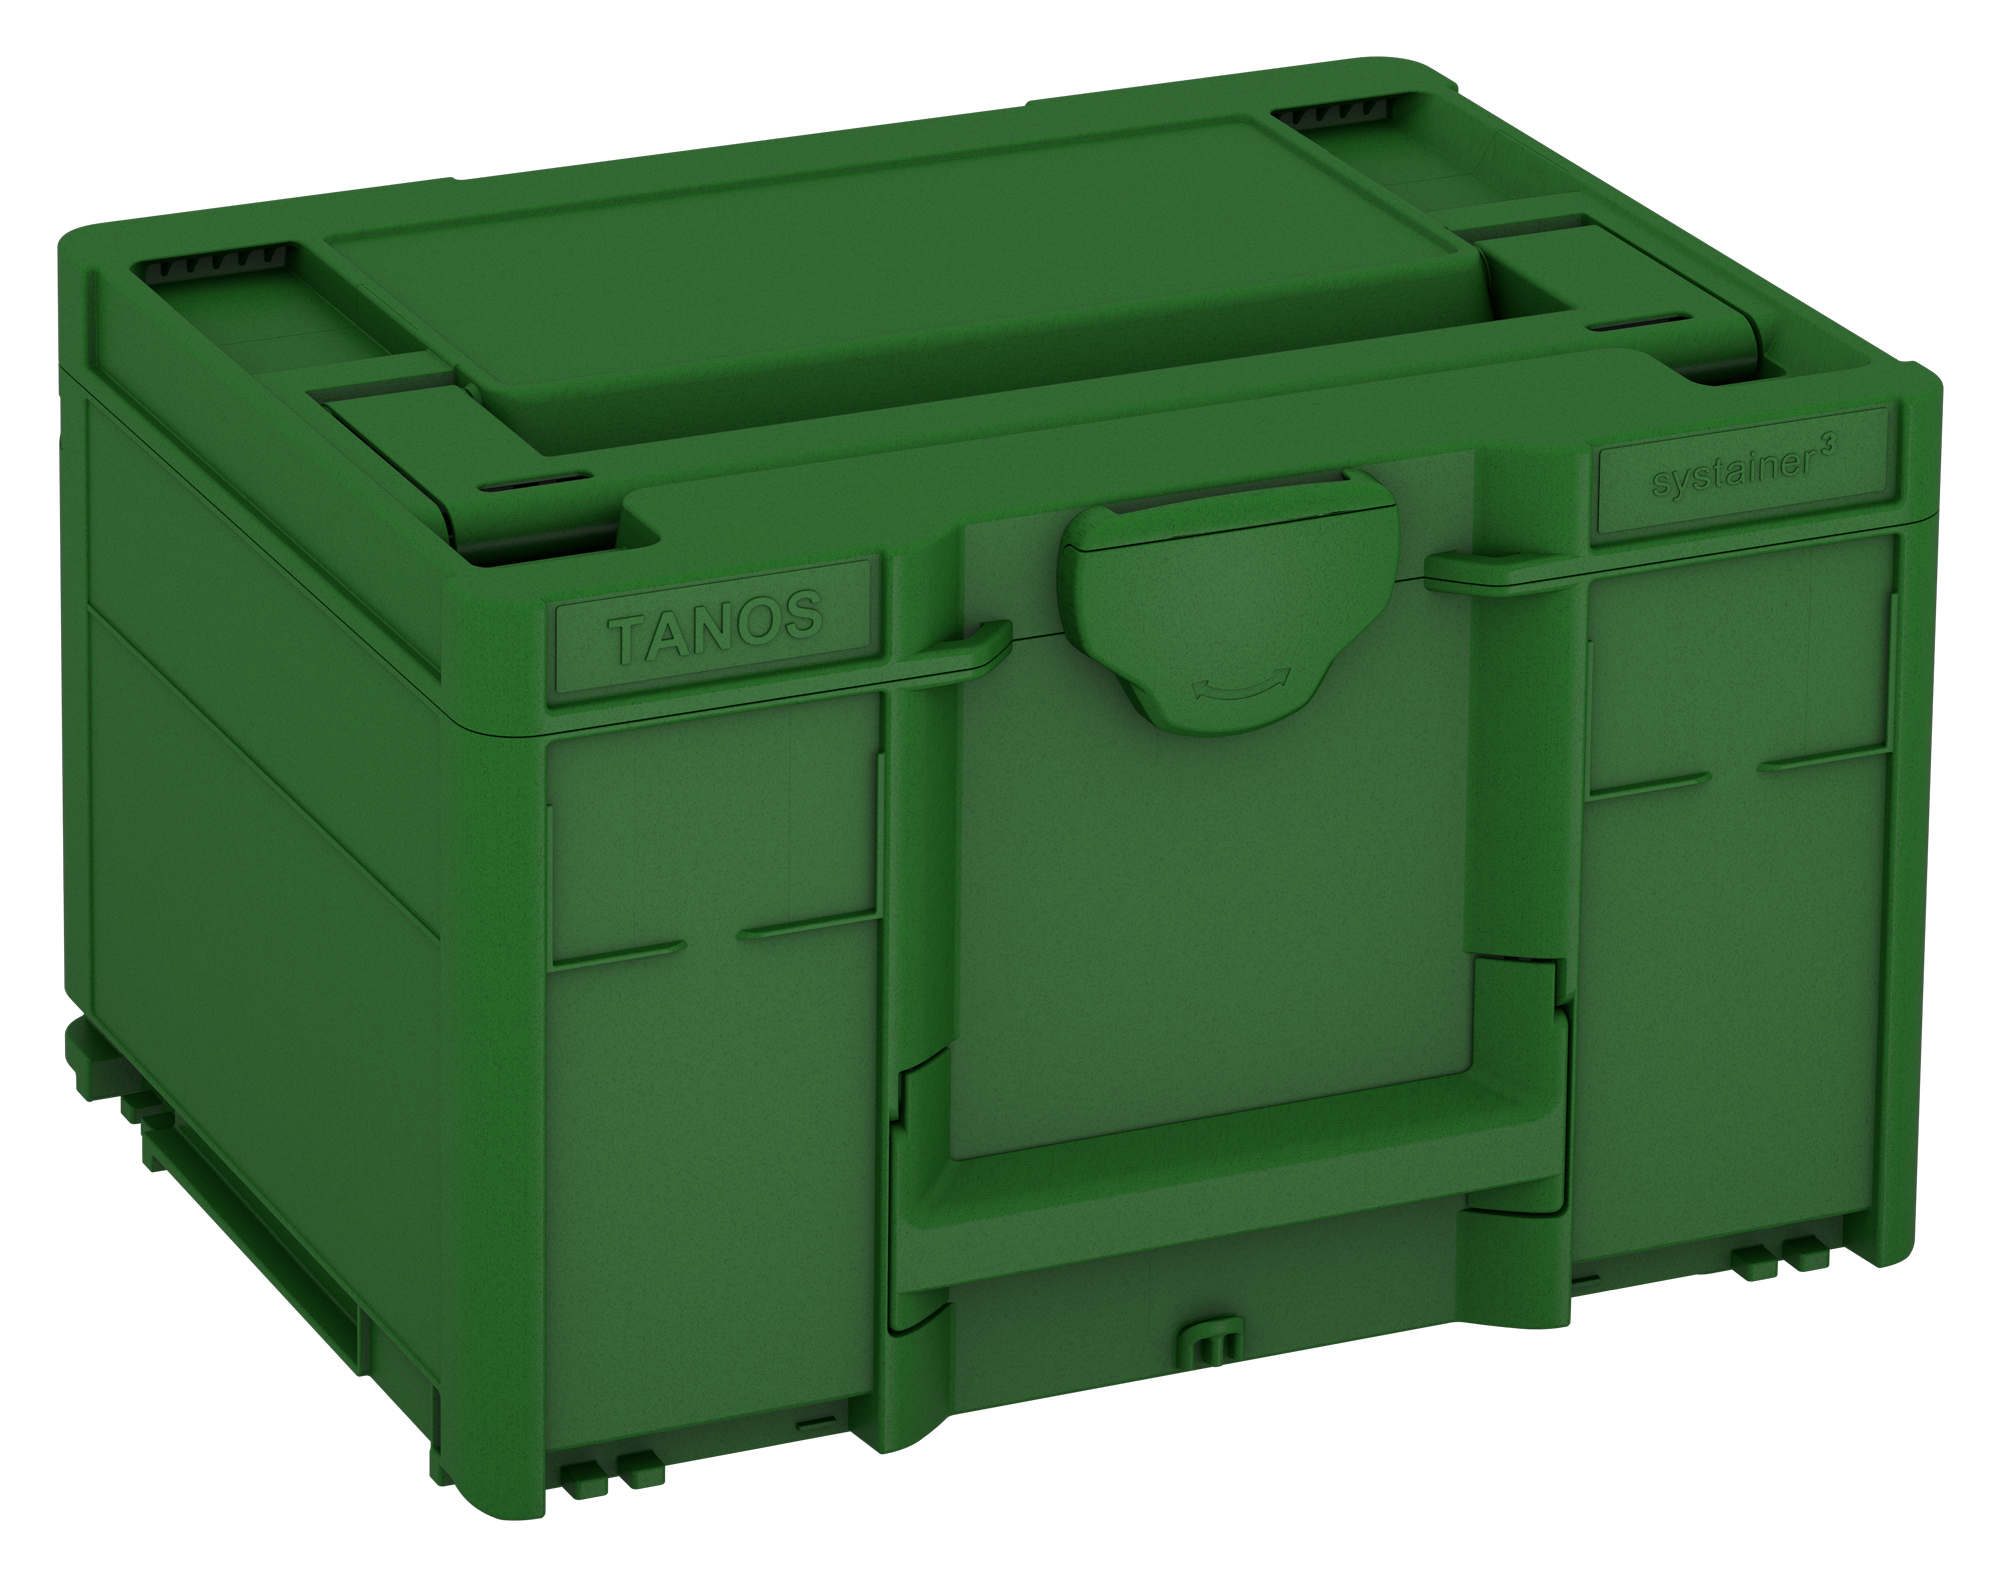 Systainer³ M 237 - Korpus Farbe: Smaragdgrün (RAL 6001) - Griff Farbe: Smaragdgrün (RAL 6001) - Verschluss Farbe: Smaragdgrün (RAL 6001)